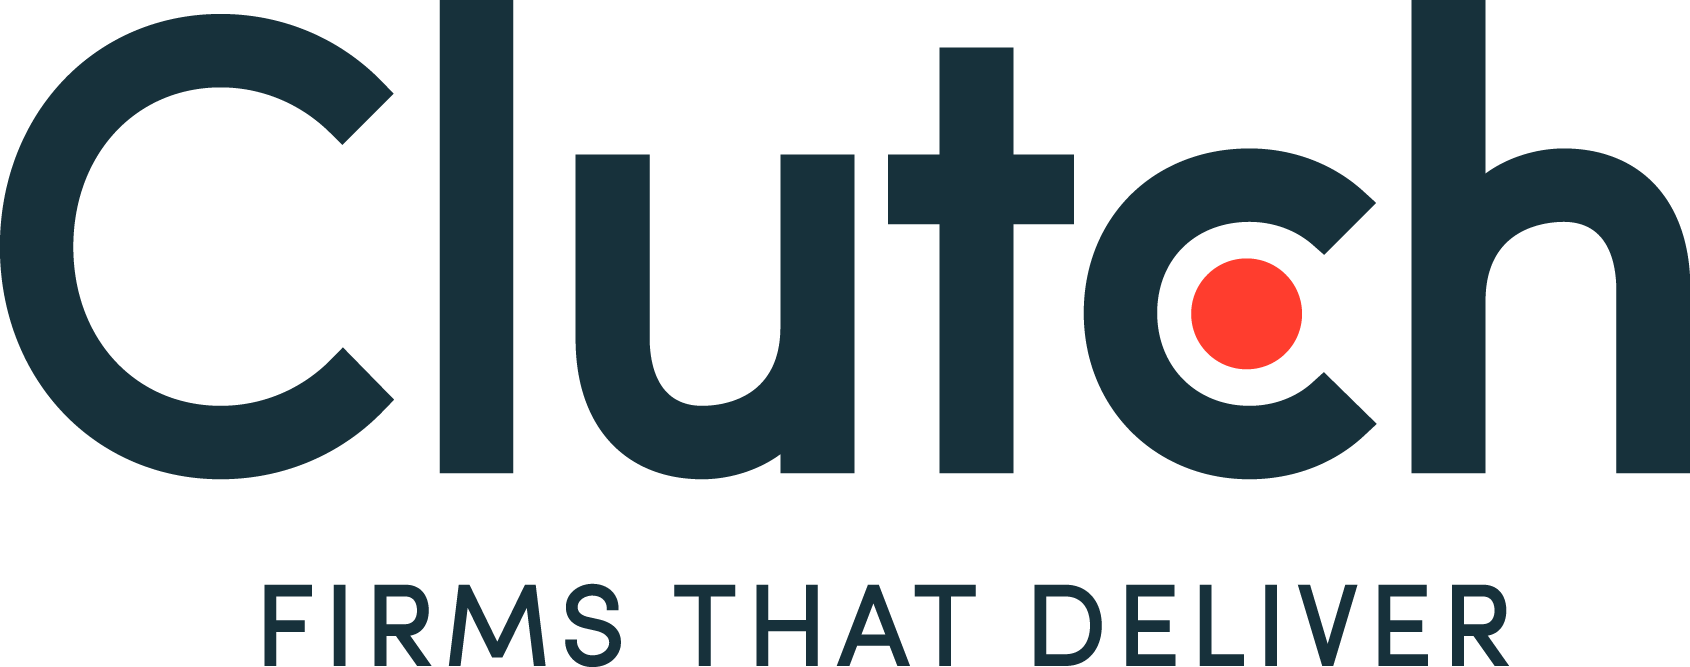  The Software Development Industry. Clutch.co logo.